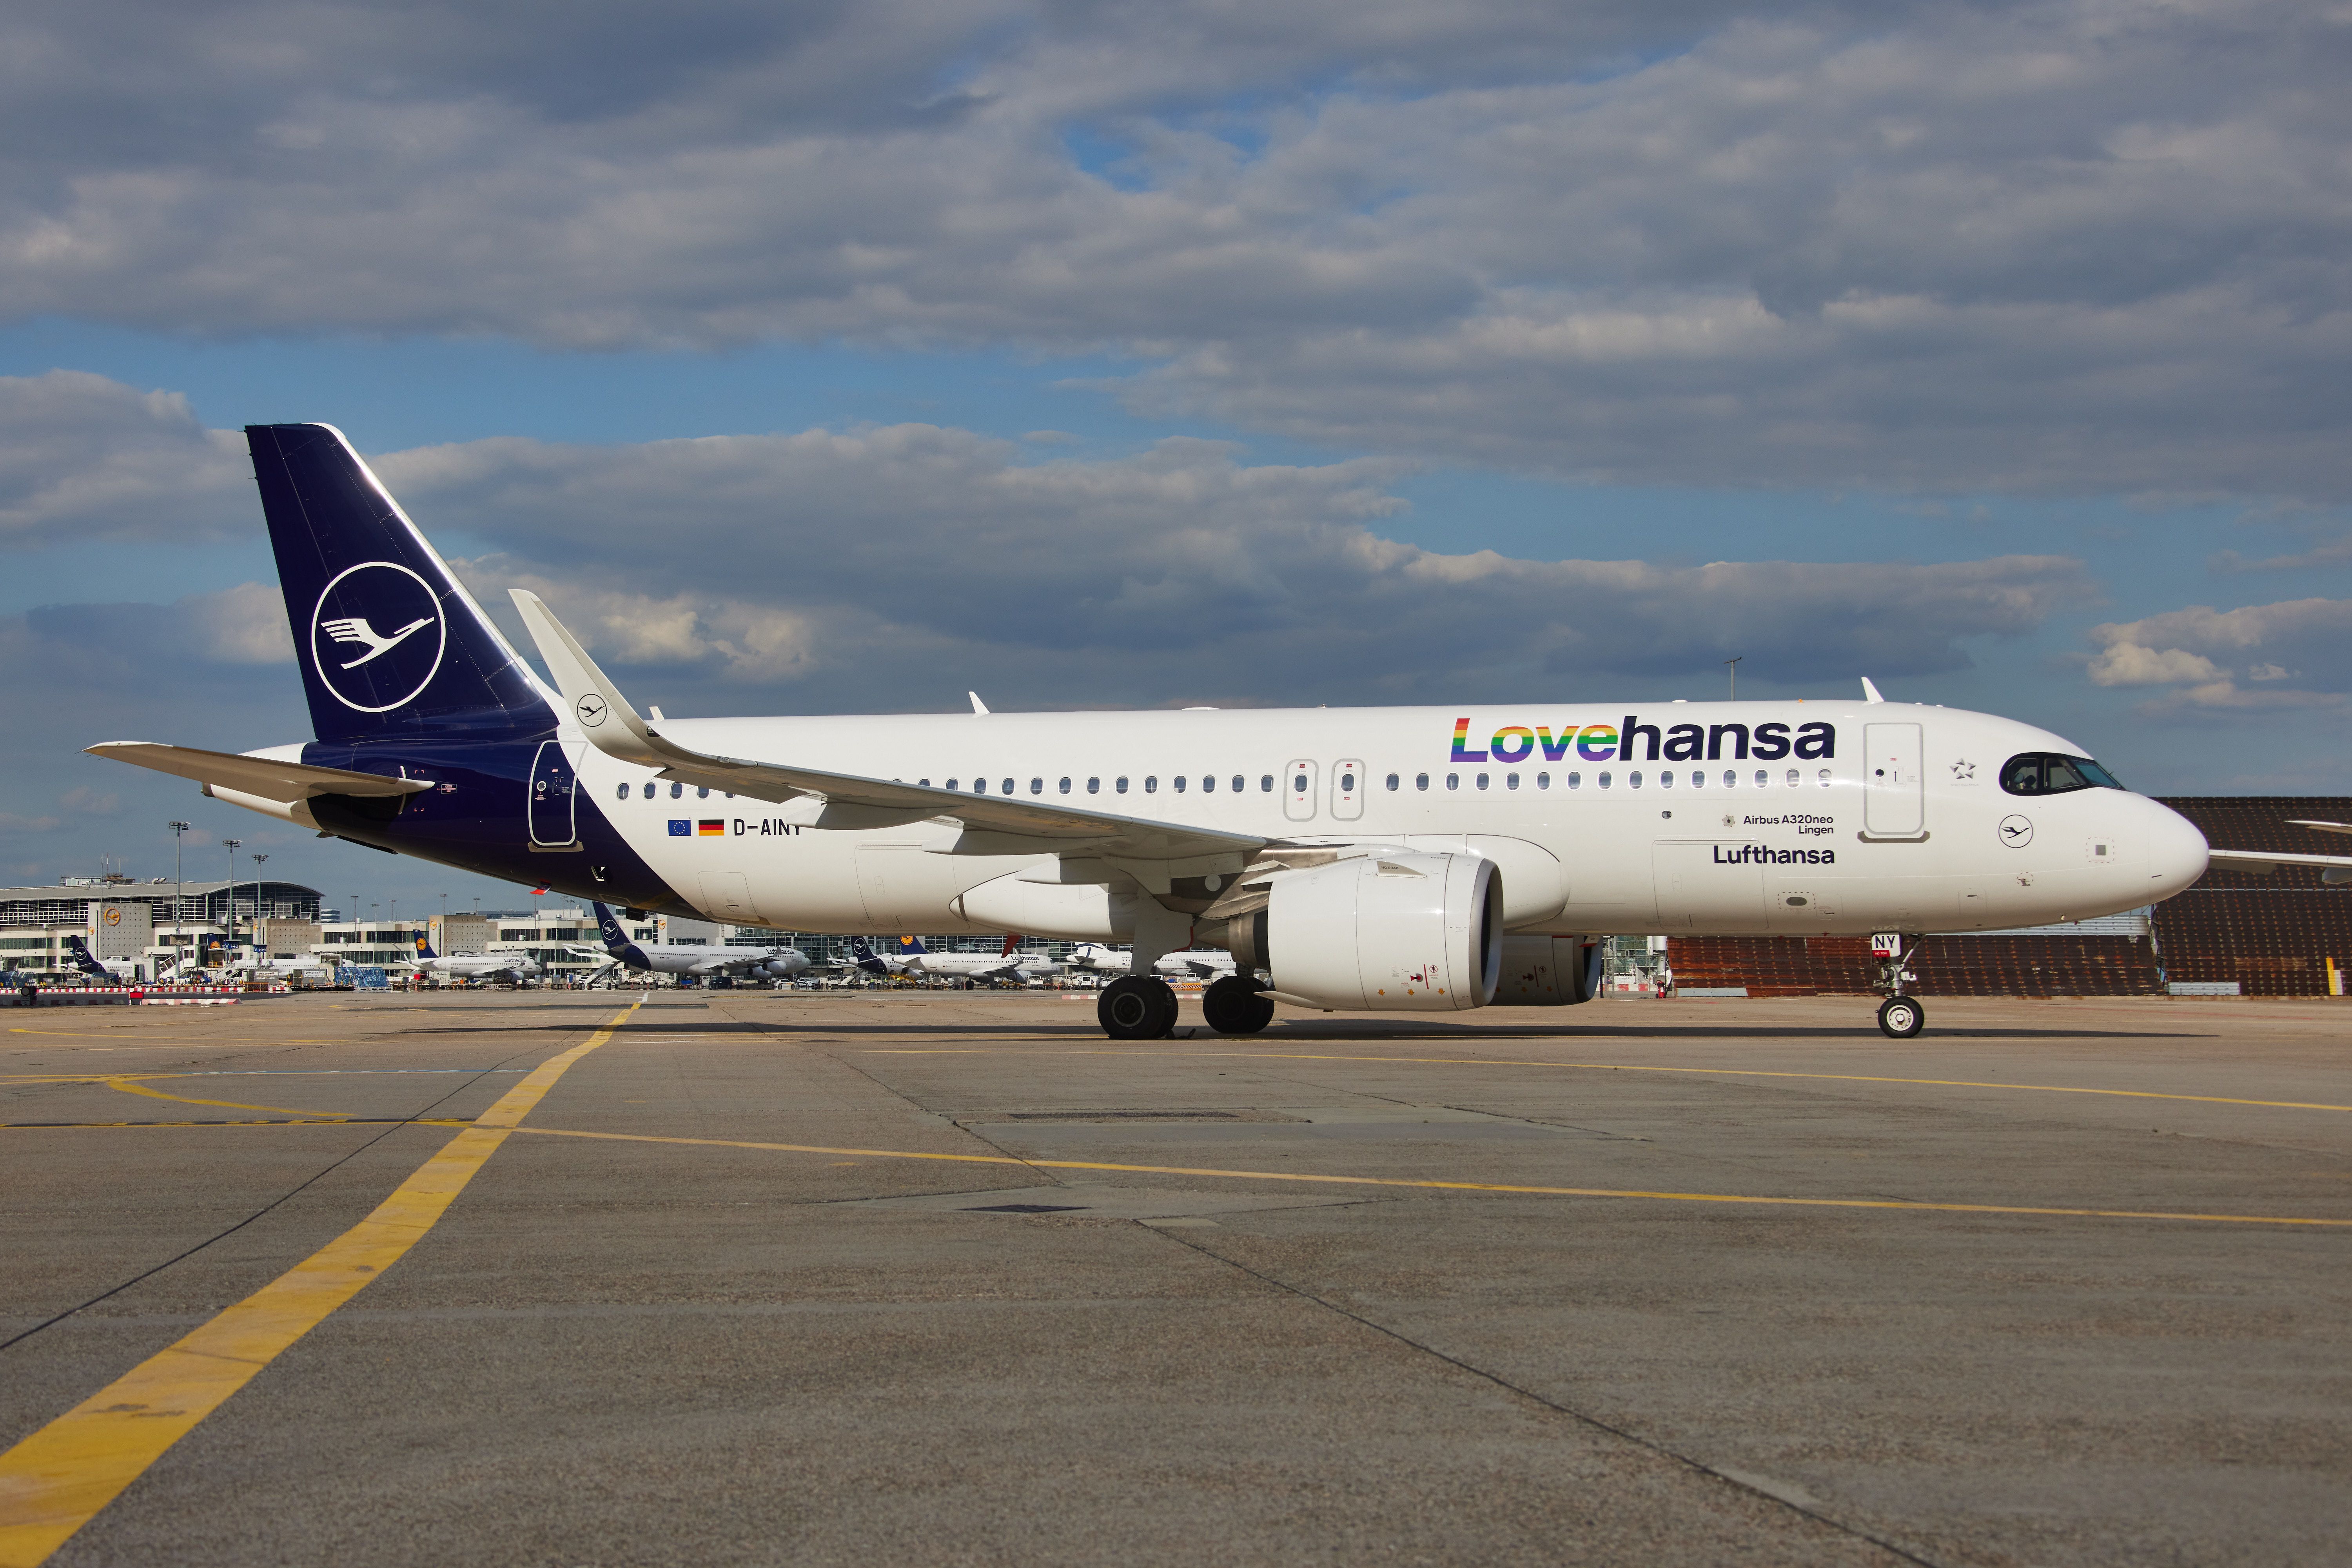 Lufthansa's Lovehansa livery